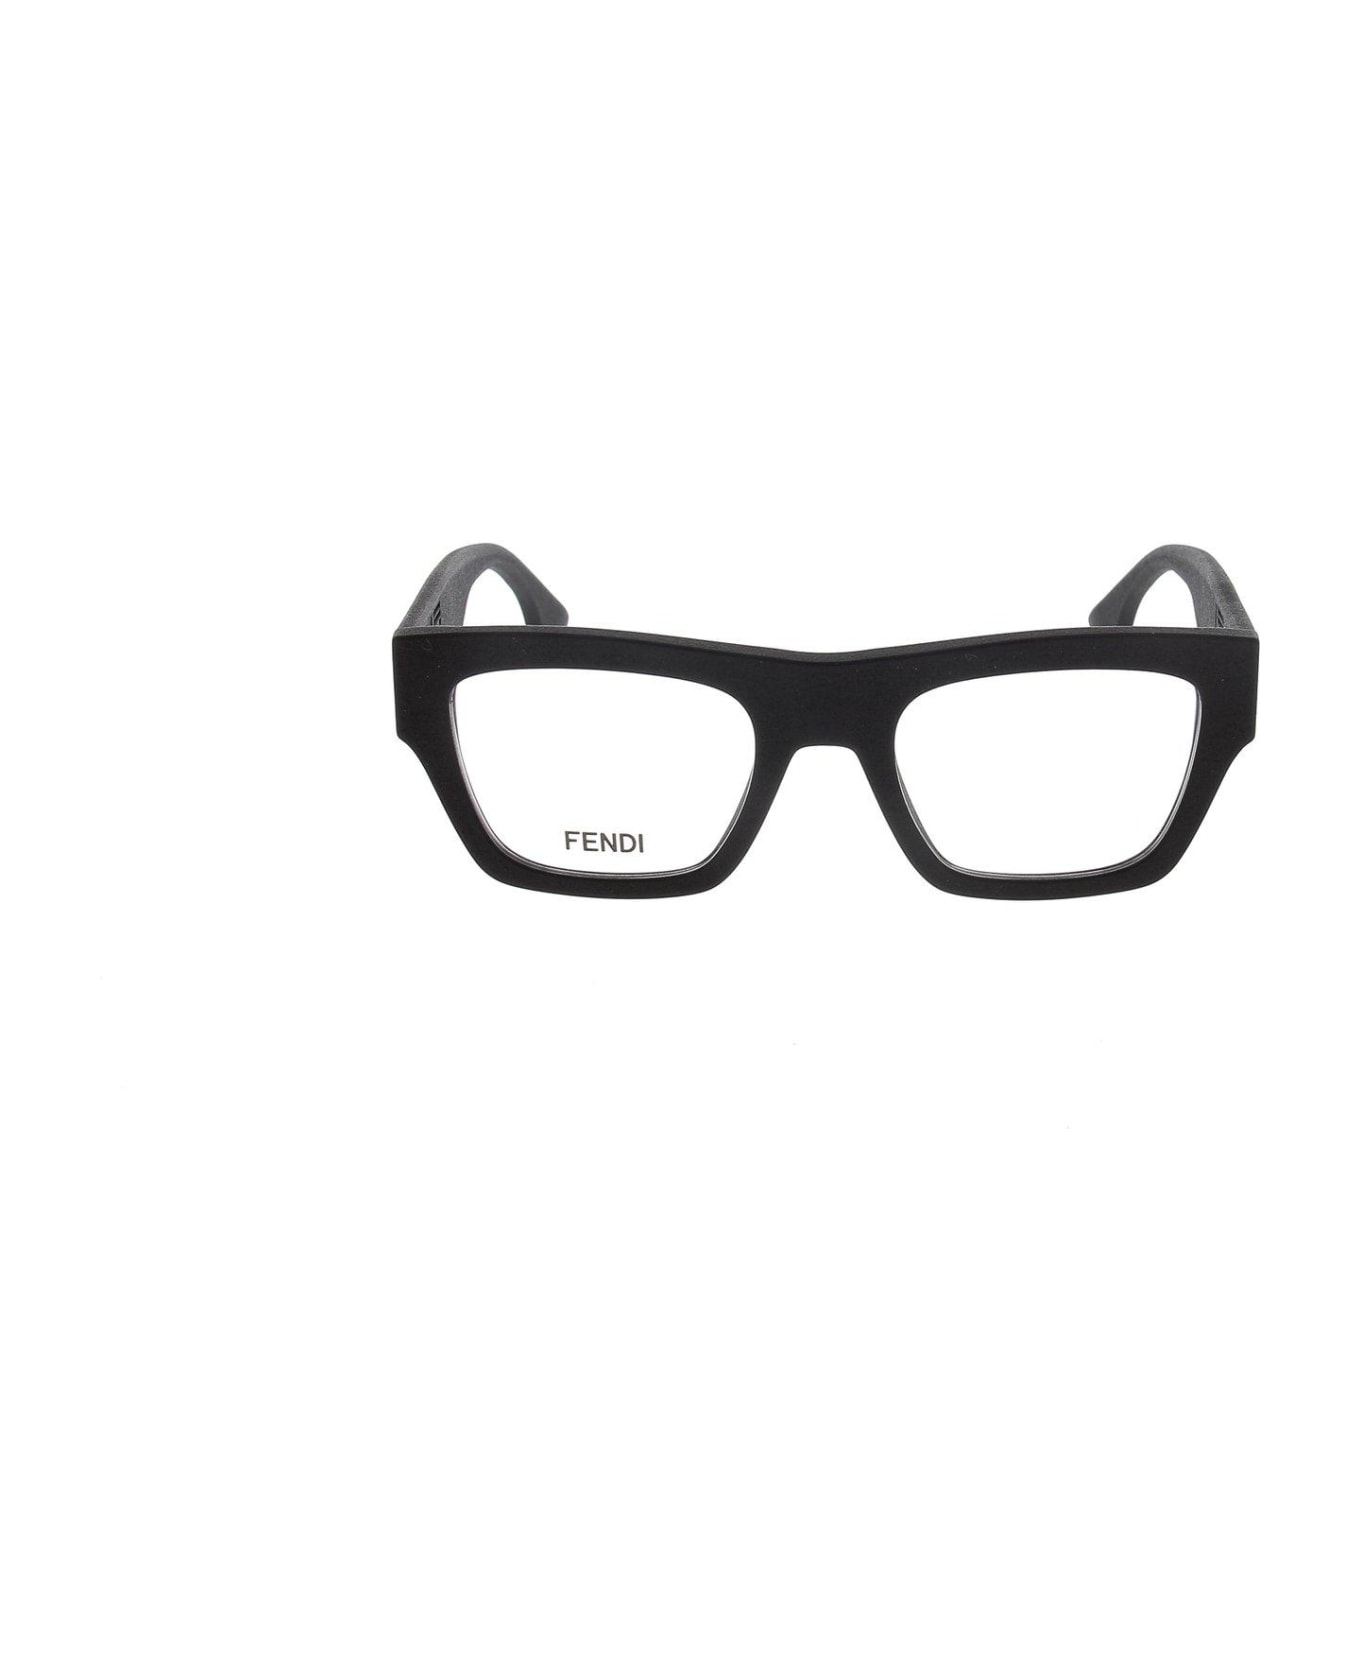 Fendi Eyewear Rectangular Frame Glasses - 002